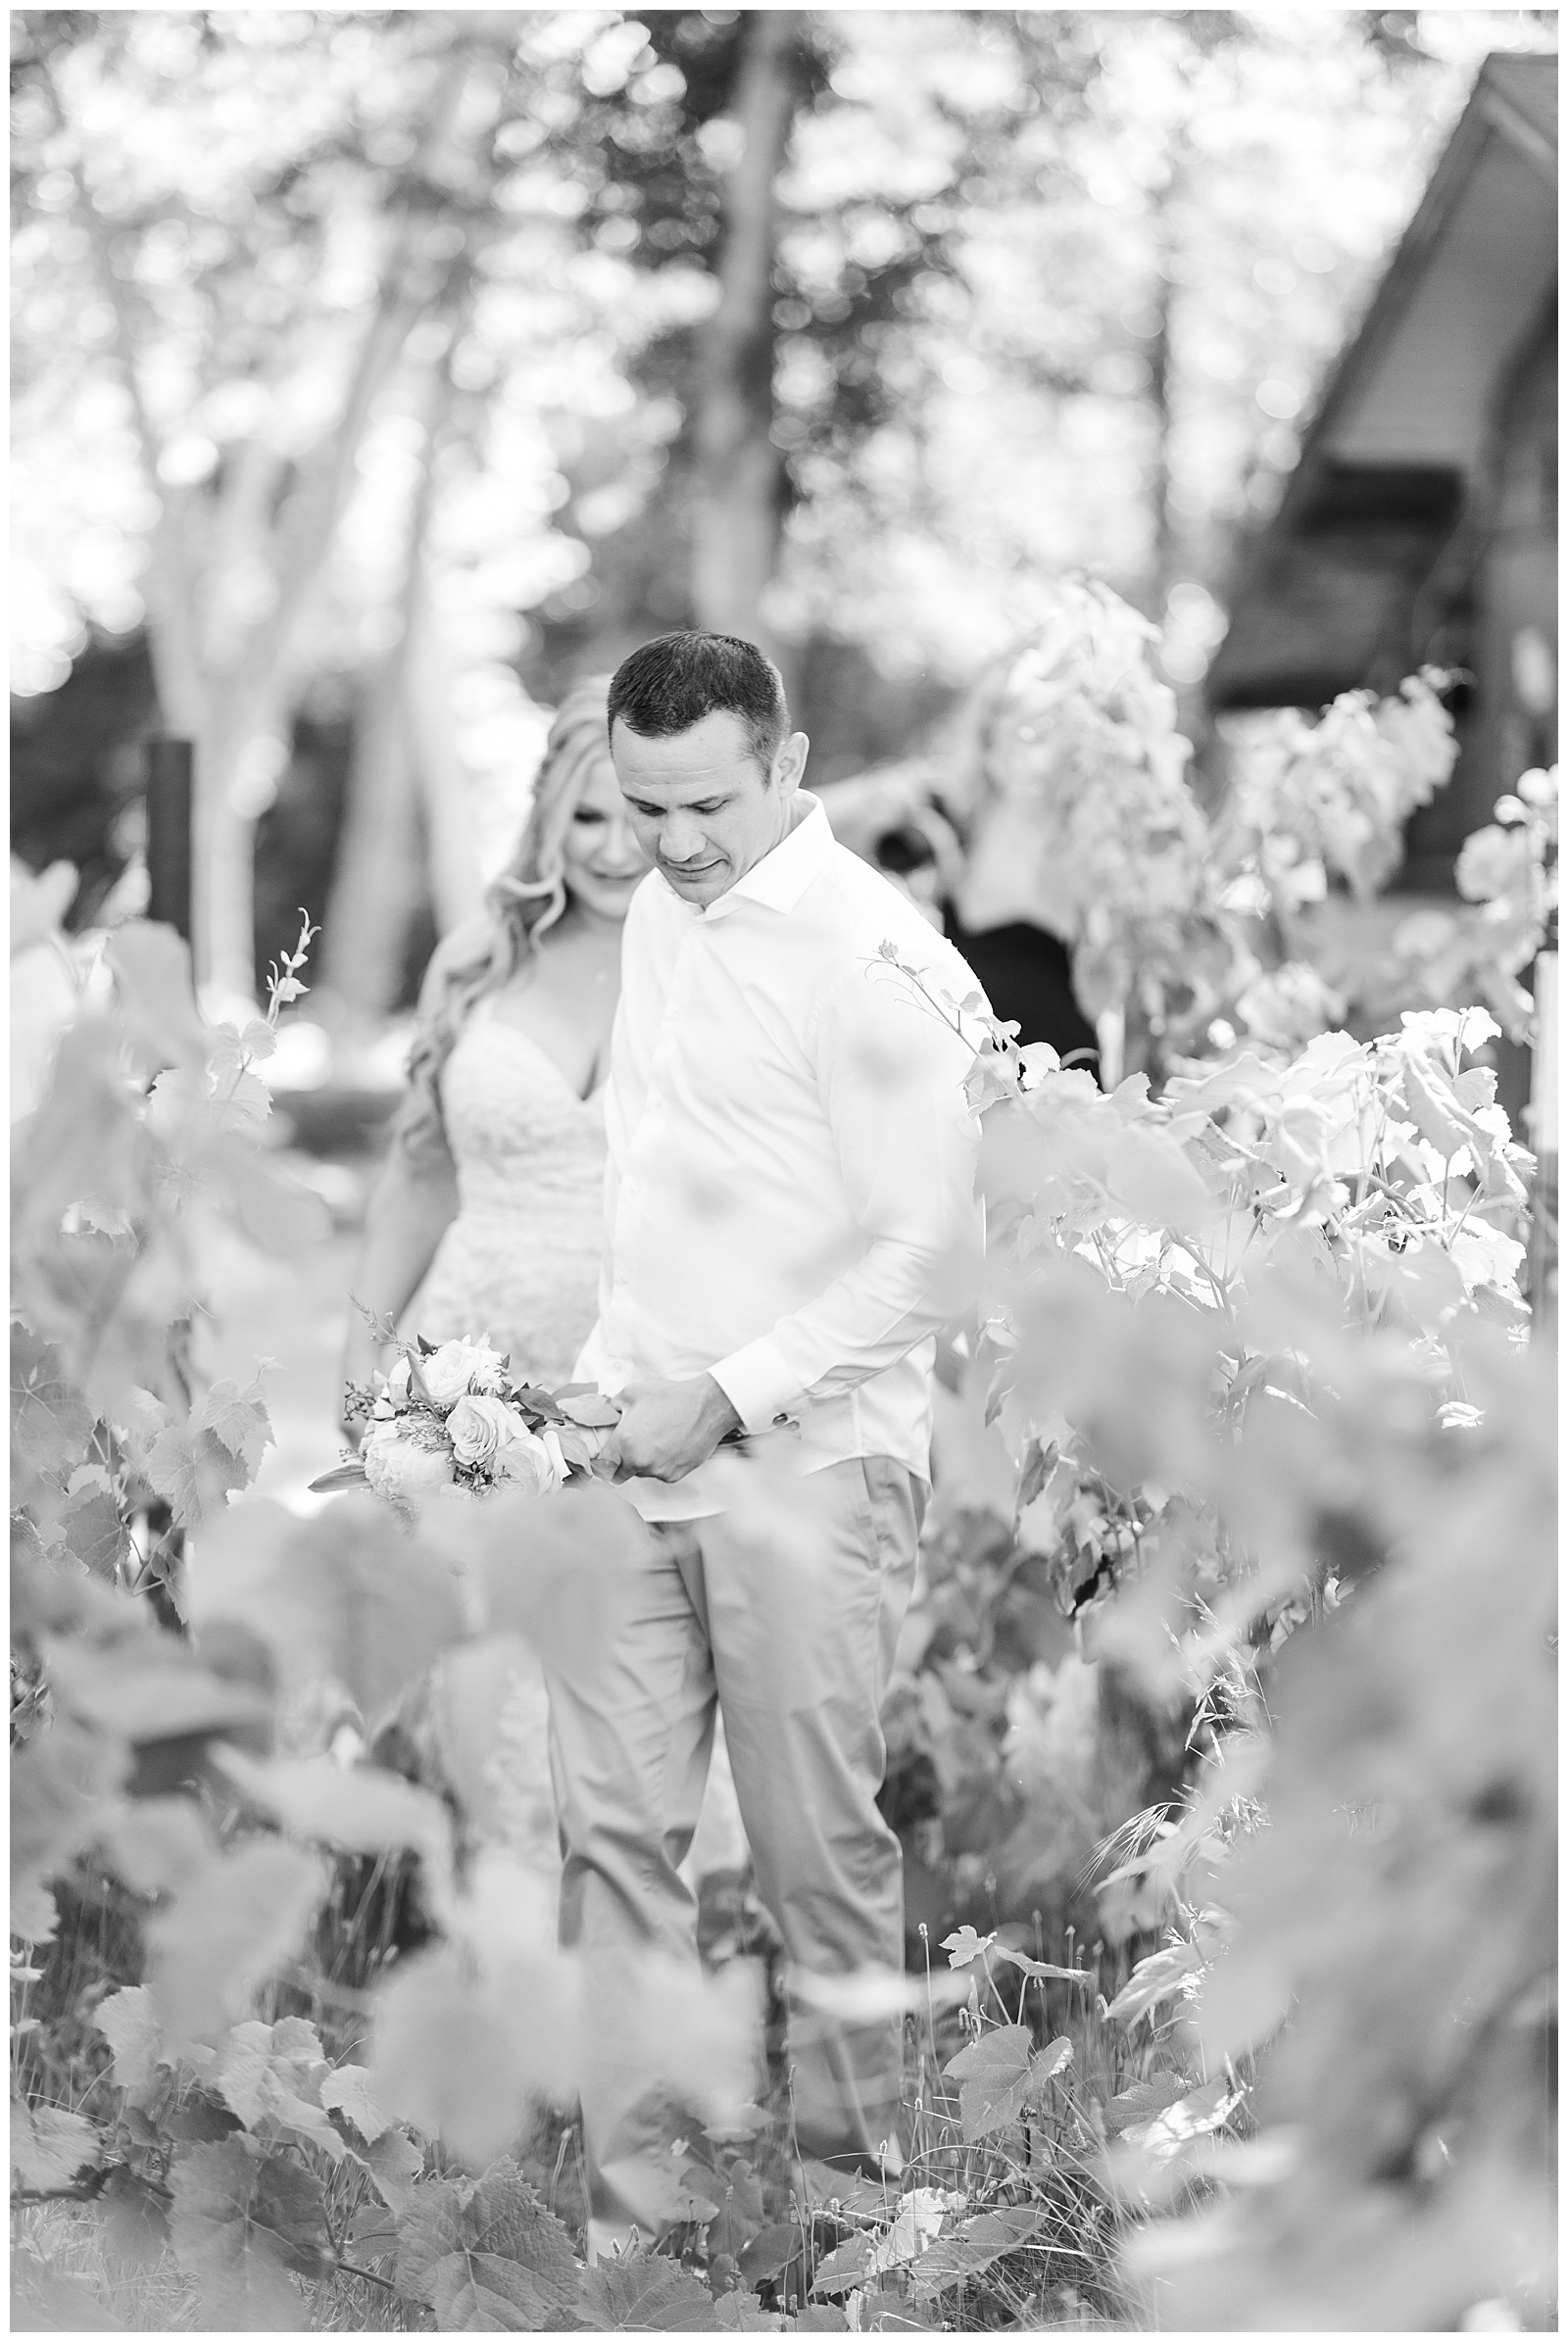 Groom leads bride through vineyard at their intimate elopement